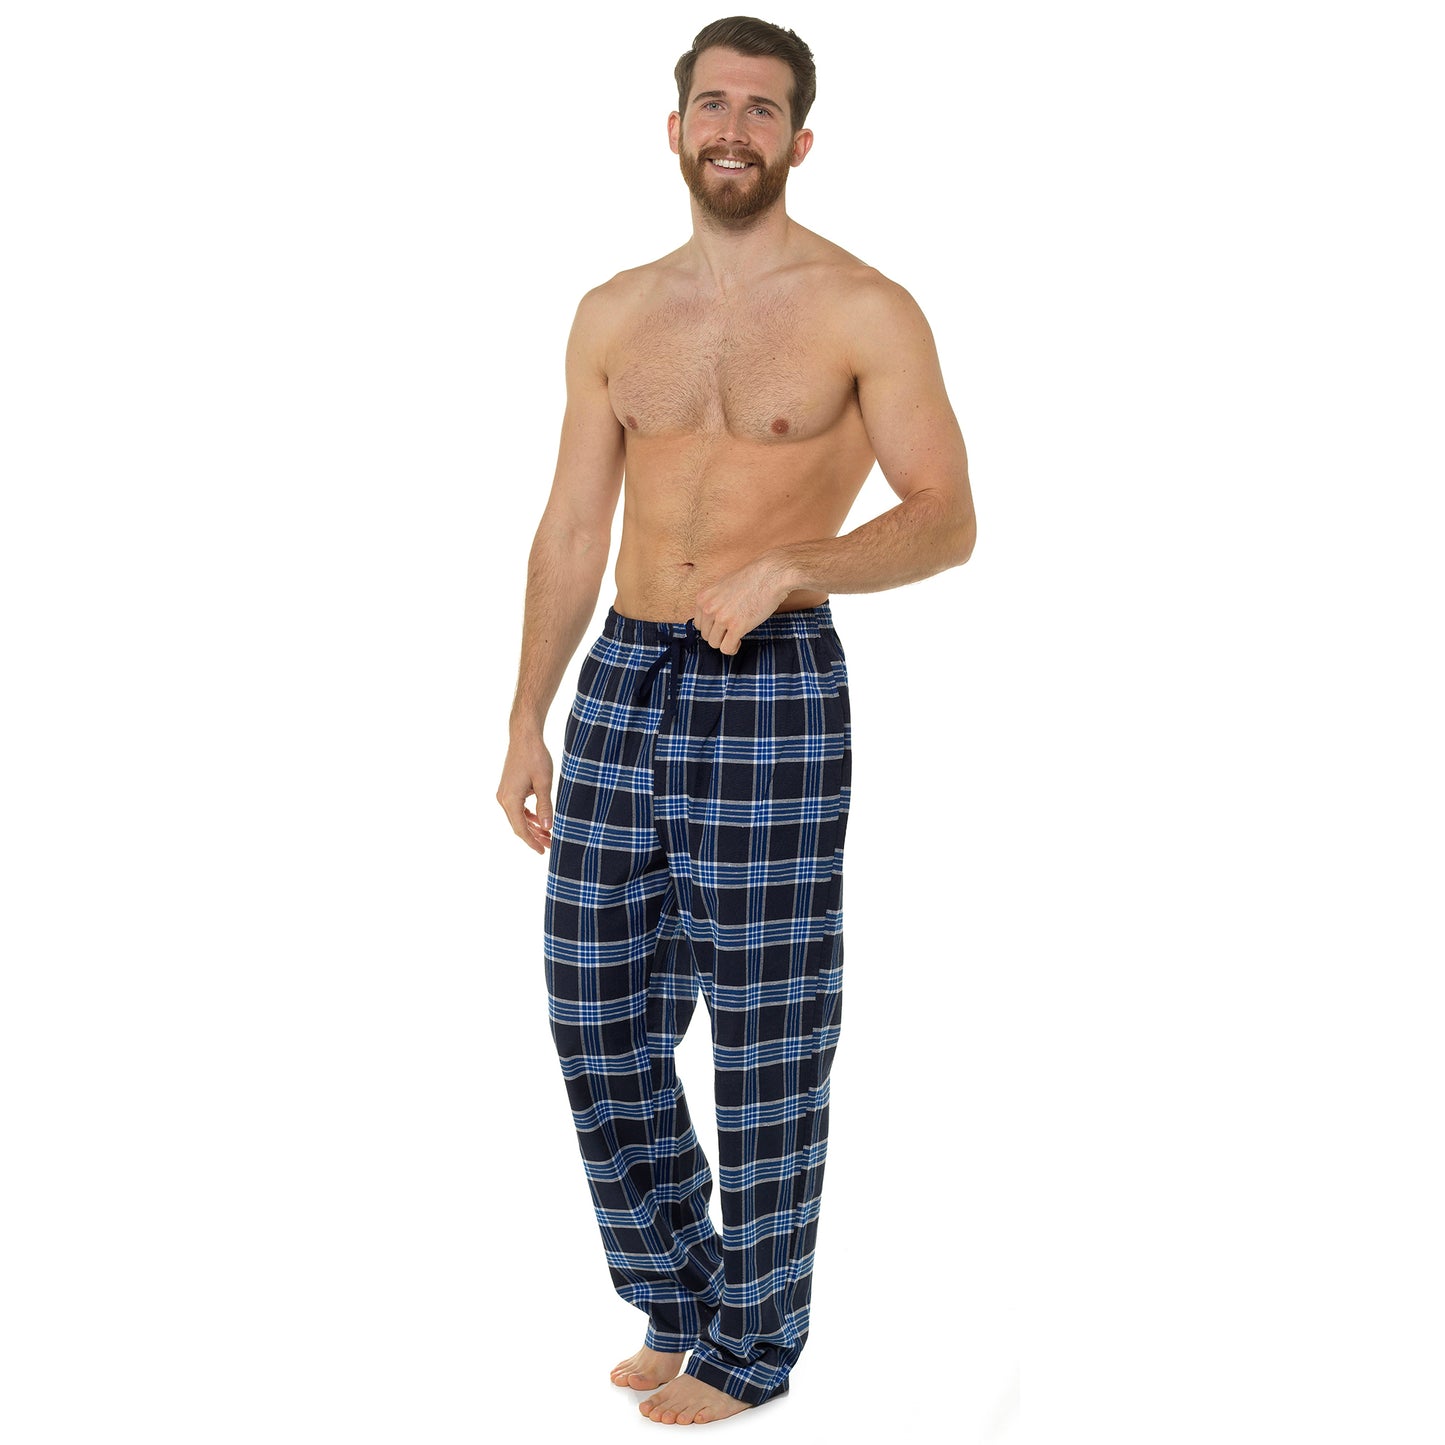 2 Pack Cotton Blend Pyjama Bottoms Lounge Pants - Check and Stripe Pattern